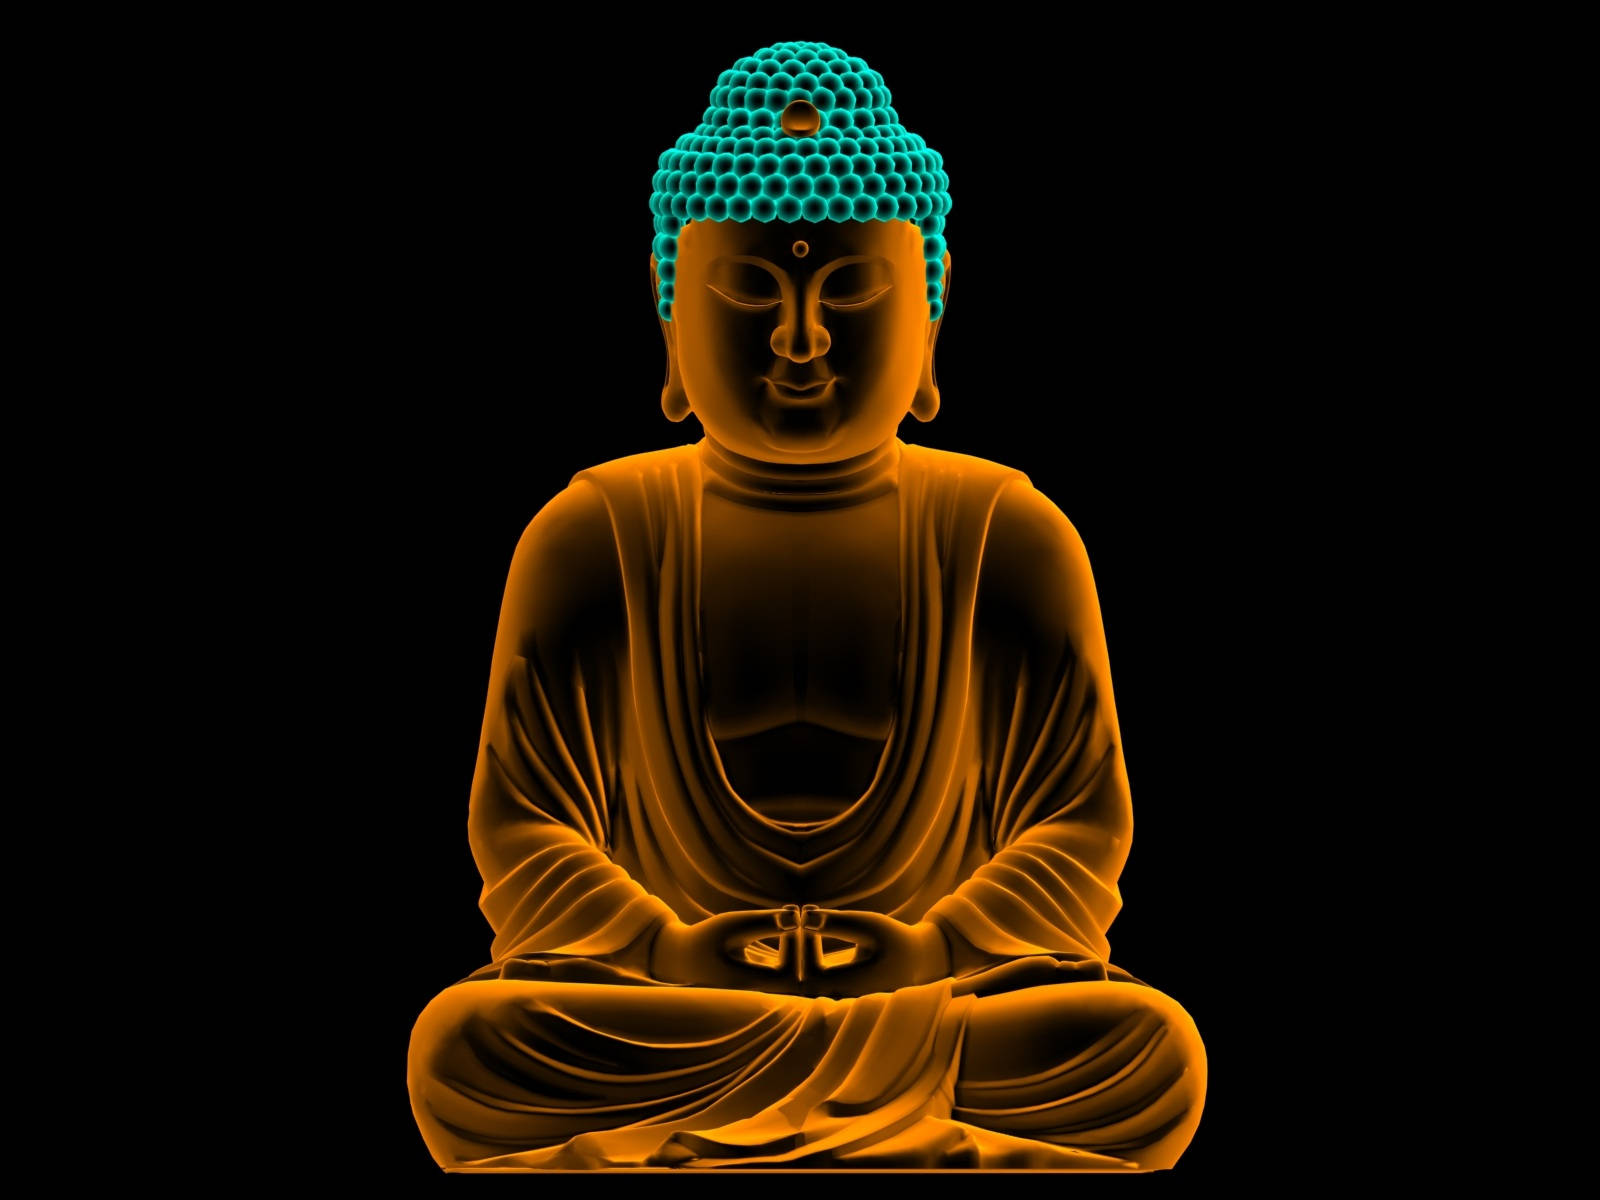 Free Buddha 3d Wallpaper Downloads, [100+] Buddha 3d Wallpapers for FREE |  